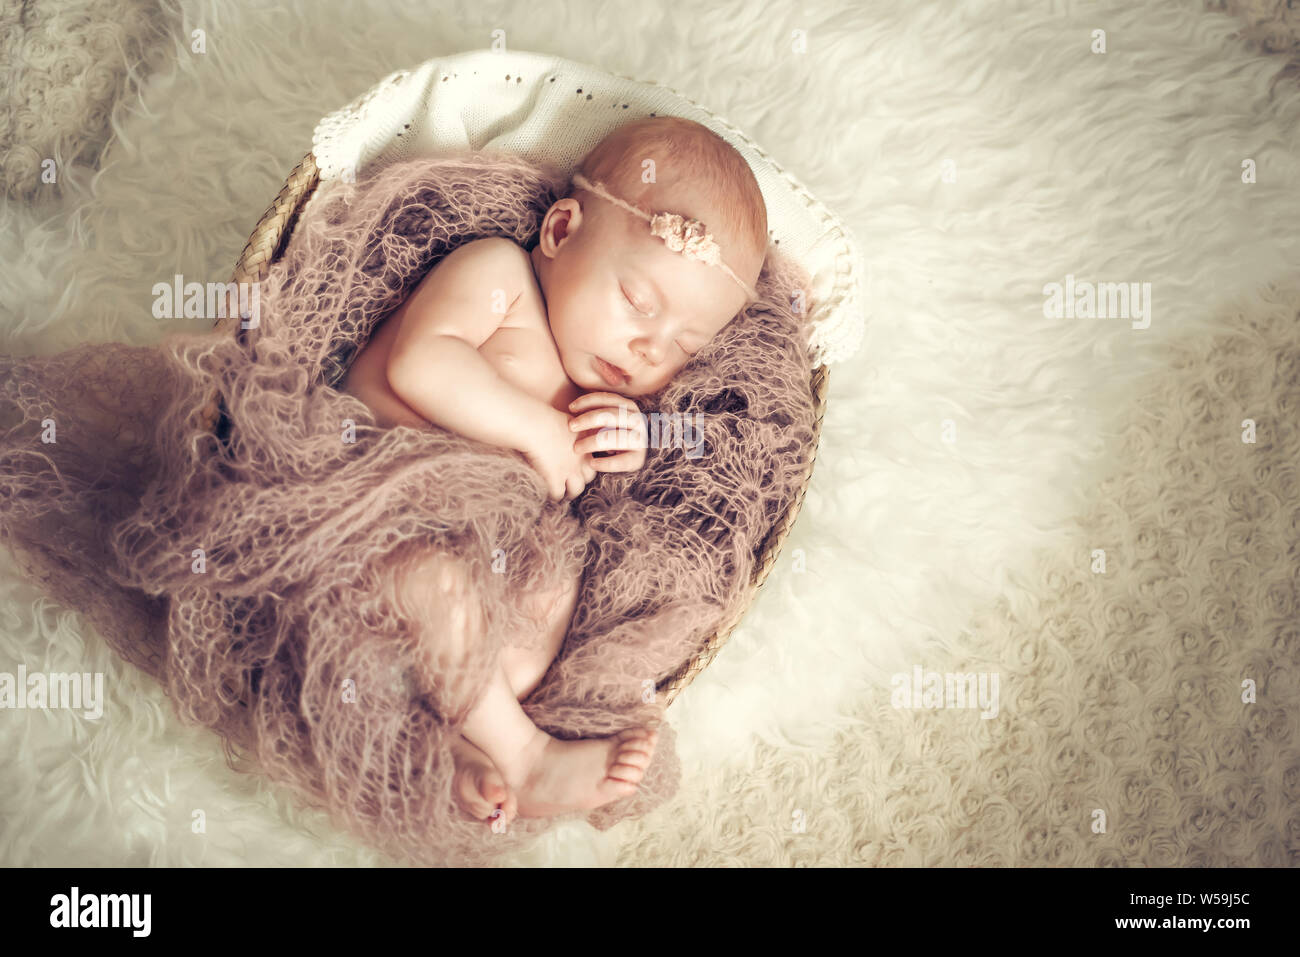 Newborn baby girl sleeping in a basket. Concept shooting newborns, innocence Stock Photo